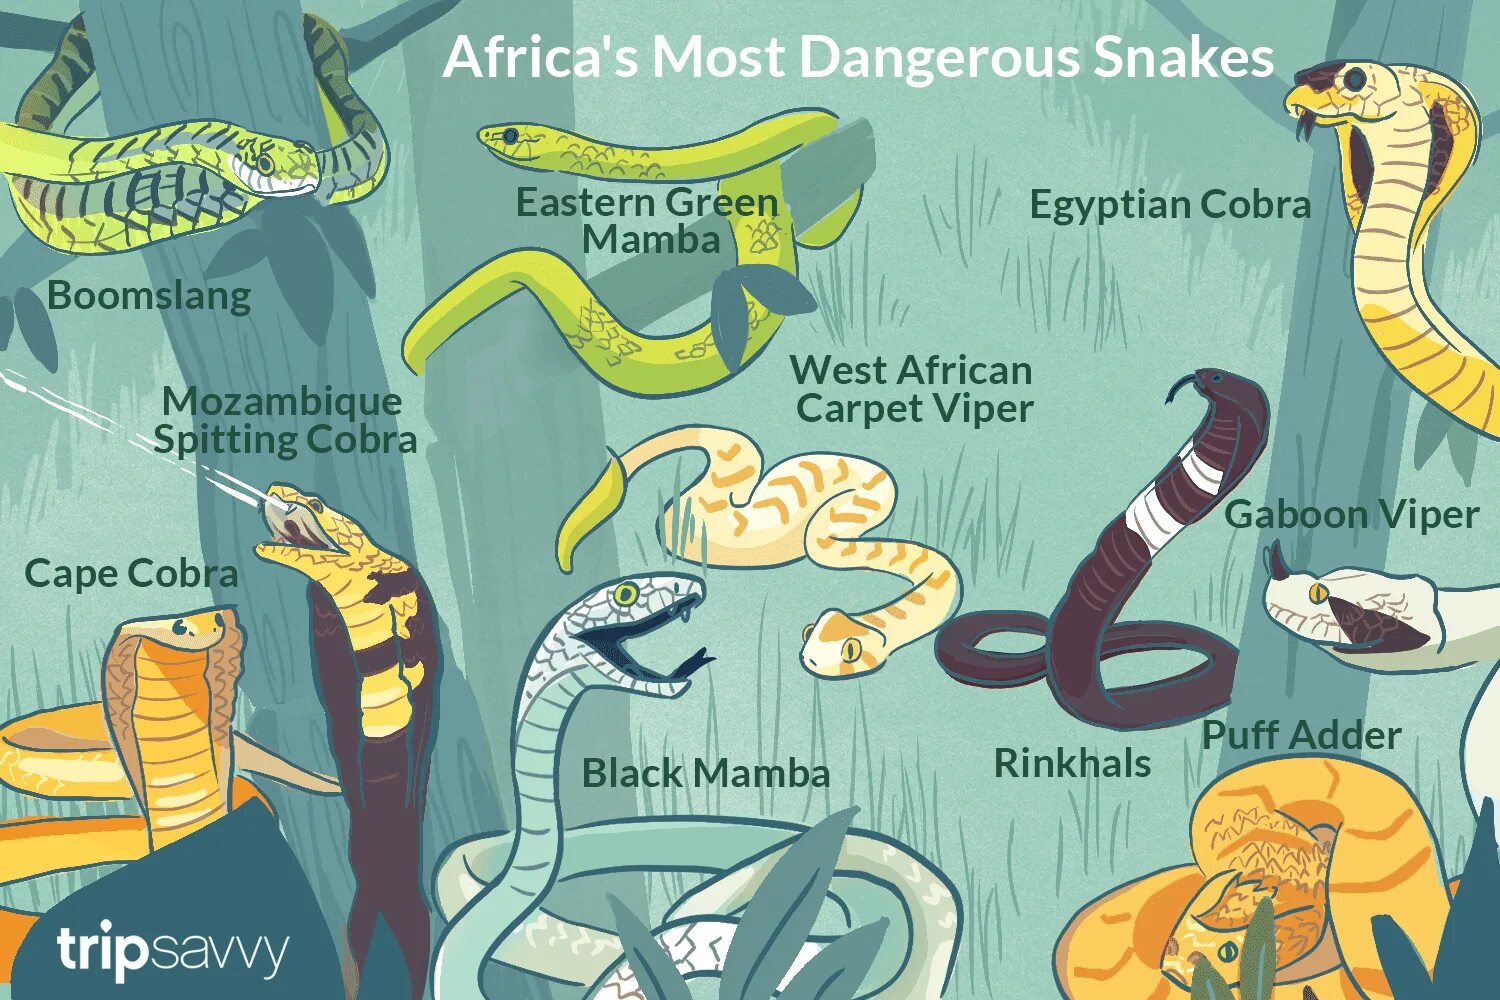 She is snake. Африканские змеи ядовитые. Змеи Африки. Бумсланг ядовитая змея. Виды змей в Африке.